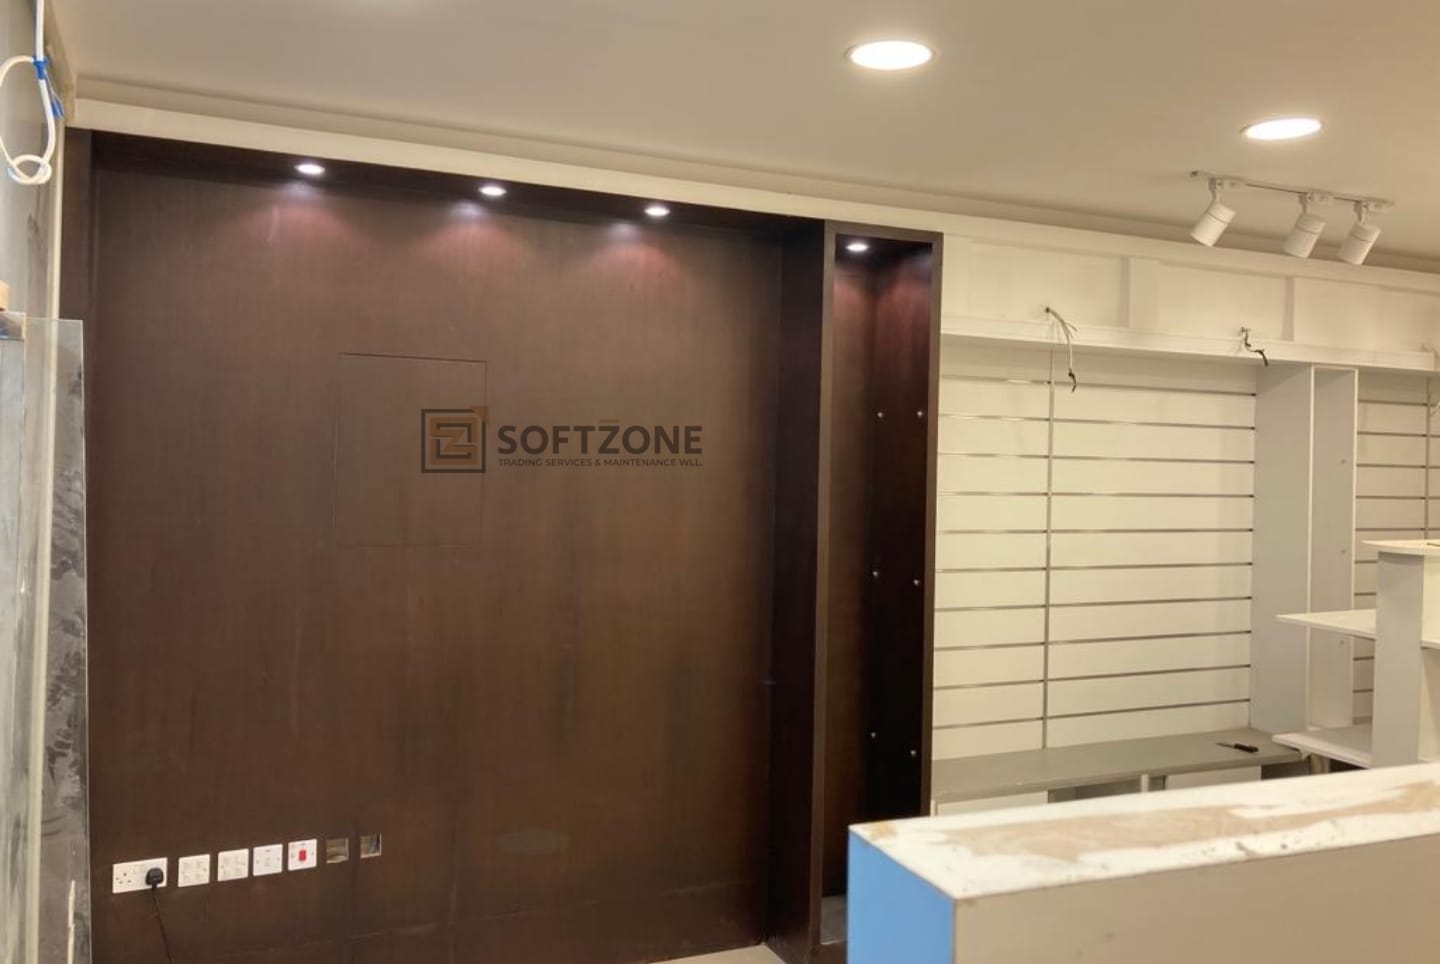 Softzone interiors | Interior Design Companies in Qatar | Showroom Fit out companies Qatar